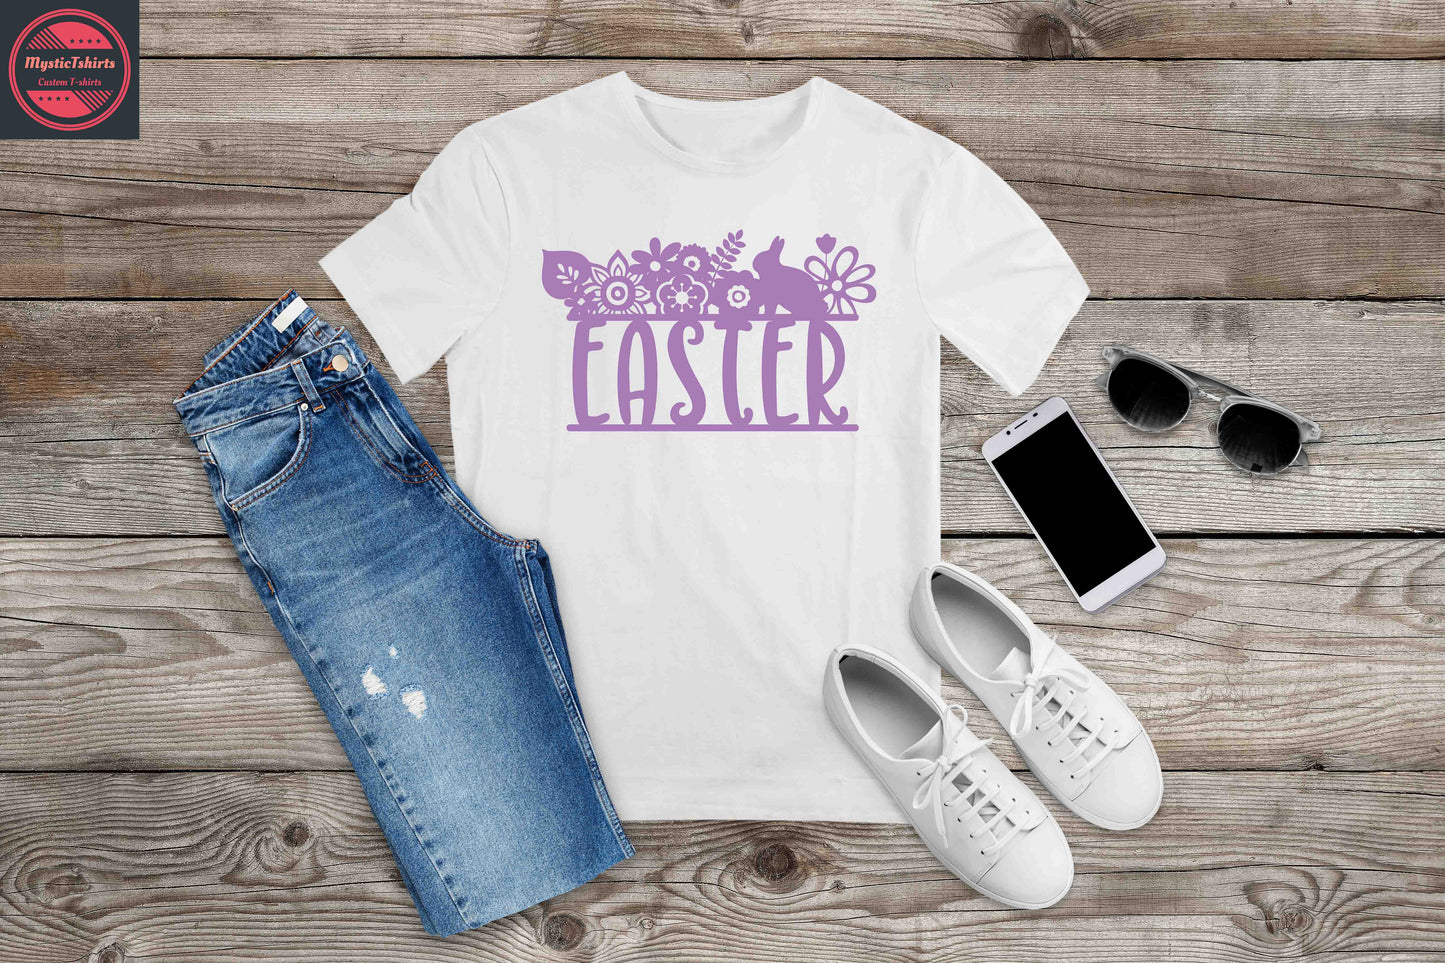 132. EASTER, Custom Made Shirt, Personalized T-Shirt, Custom Text, Make Your Own Shirt, Custom Tee